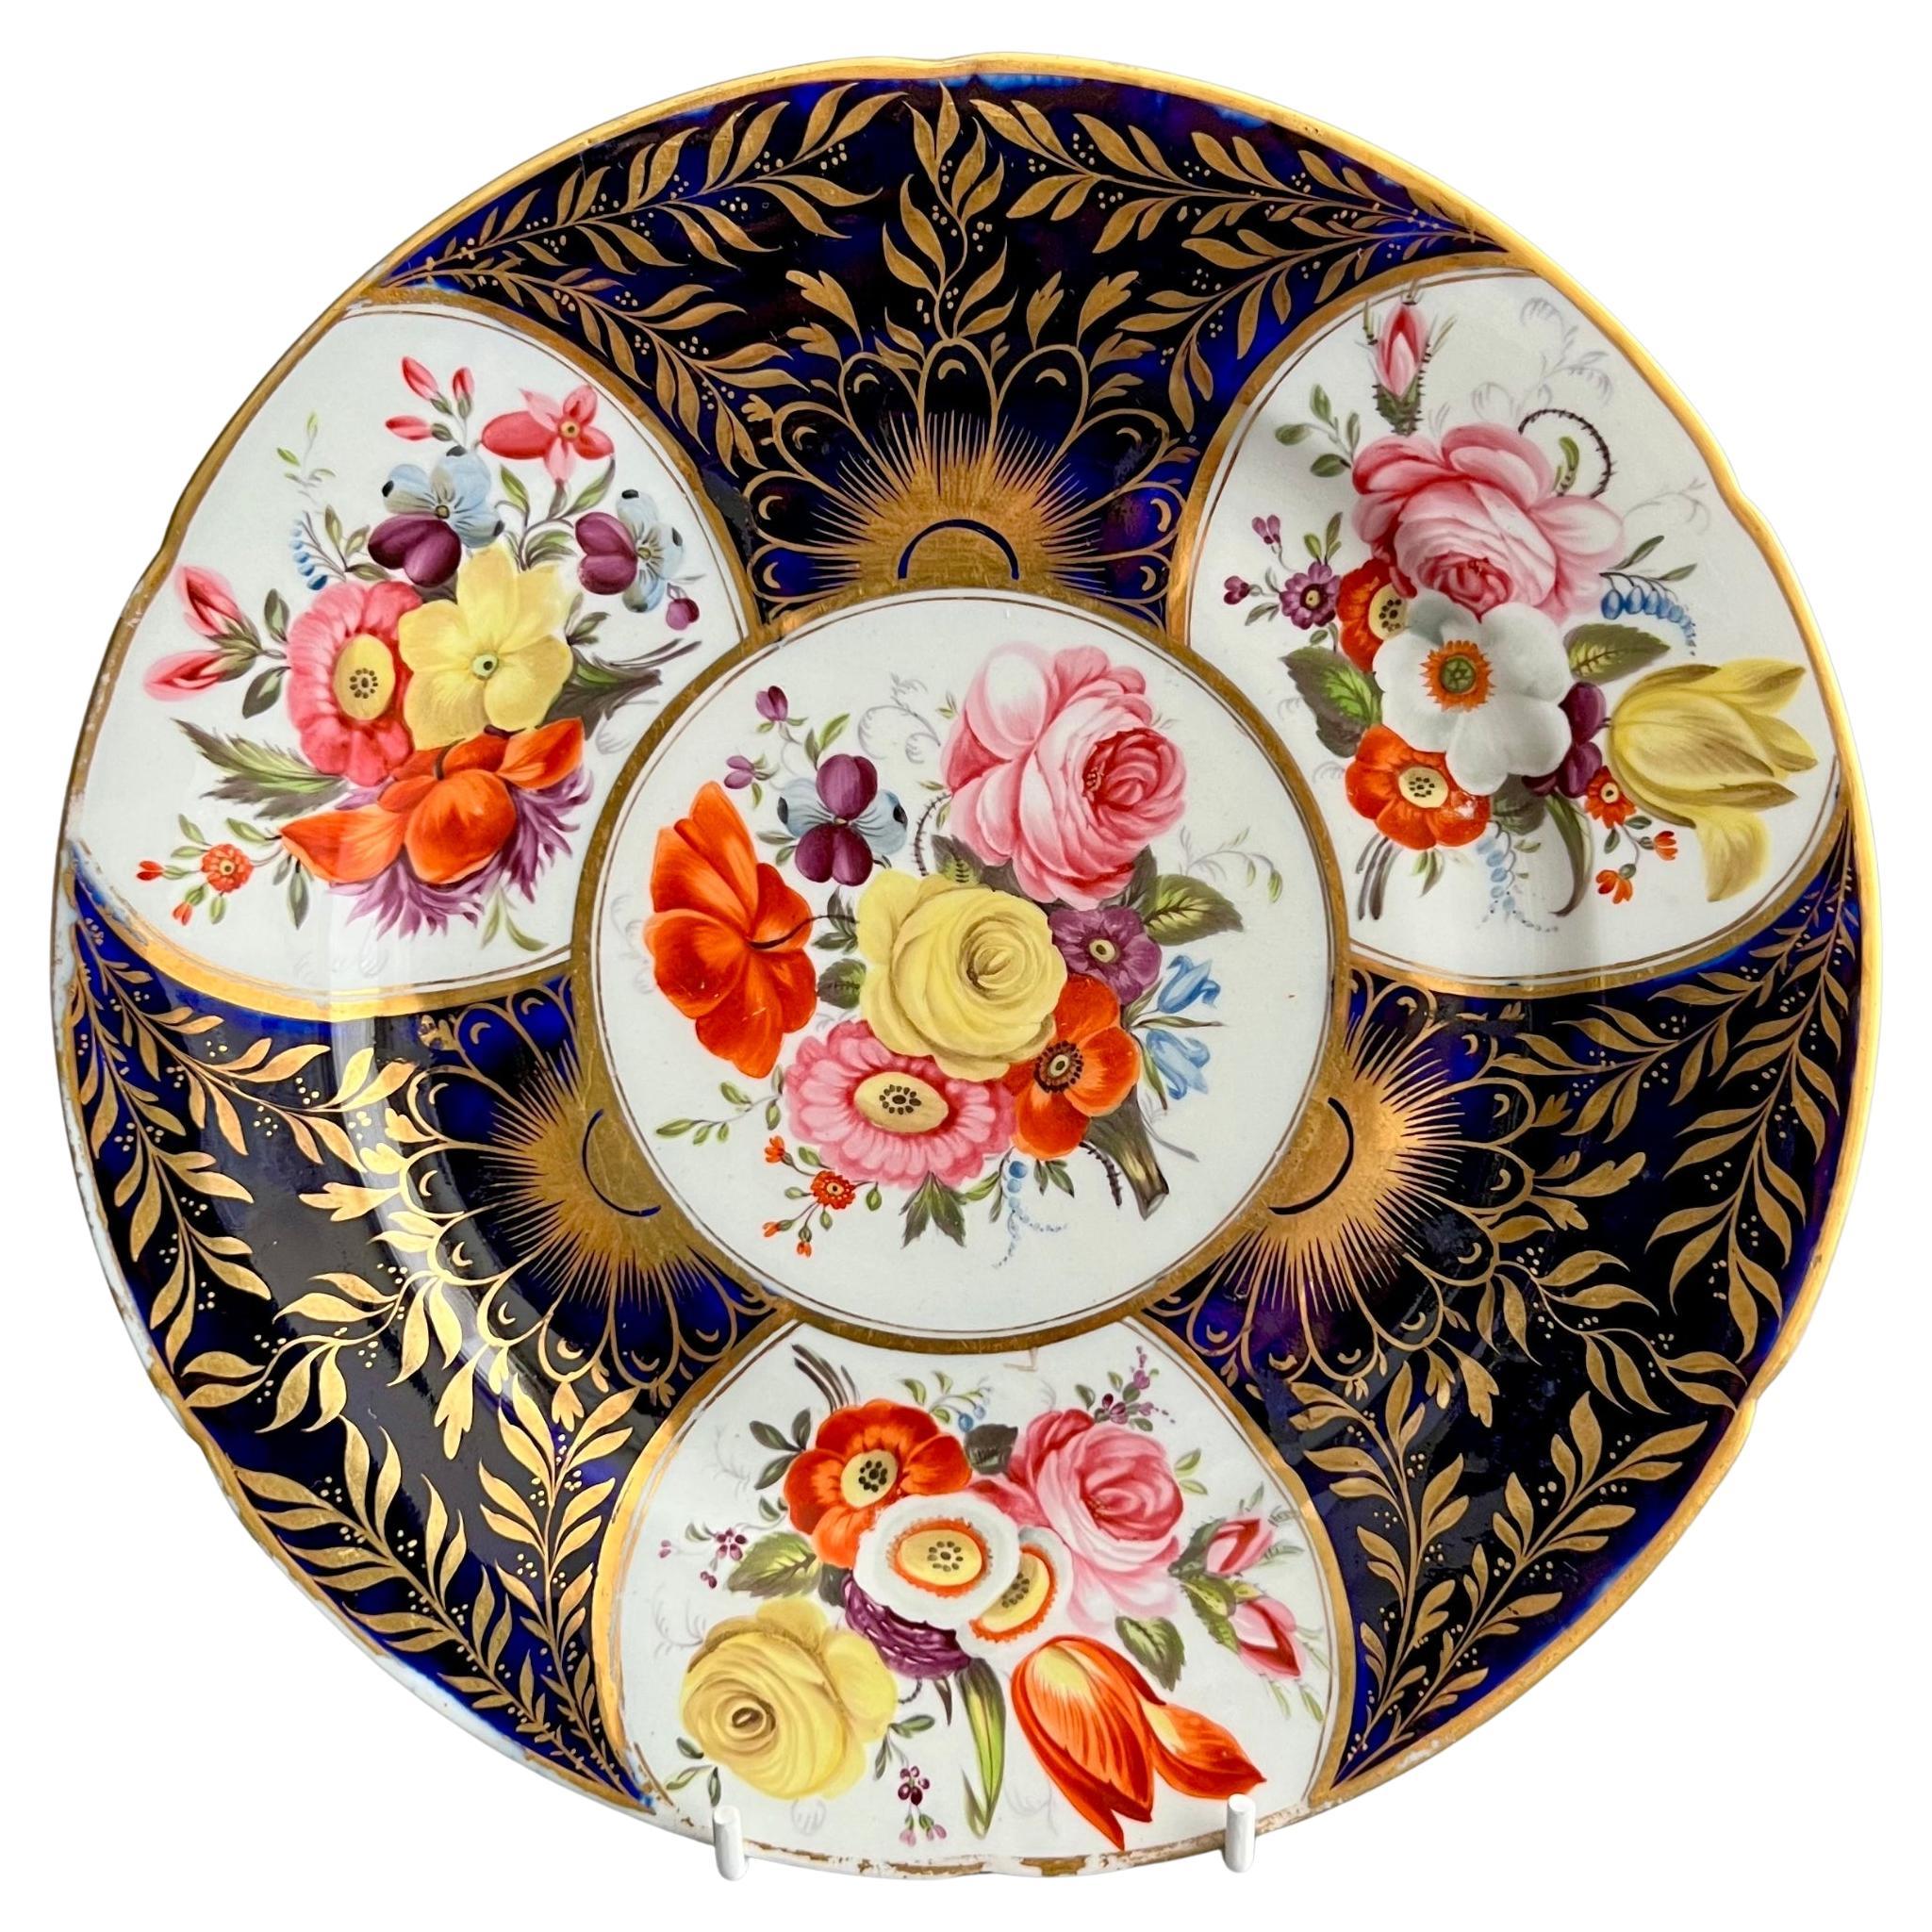 Coalport John Rose Porcelain Plate, Cobalt Blue and Flowers, ca 1805